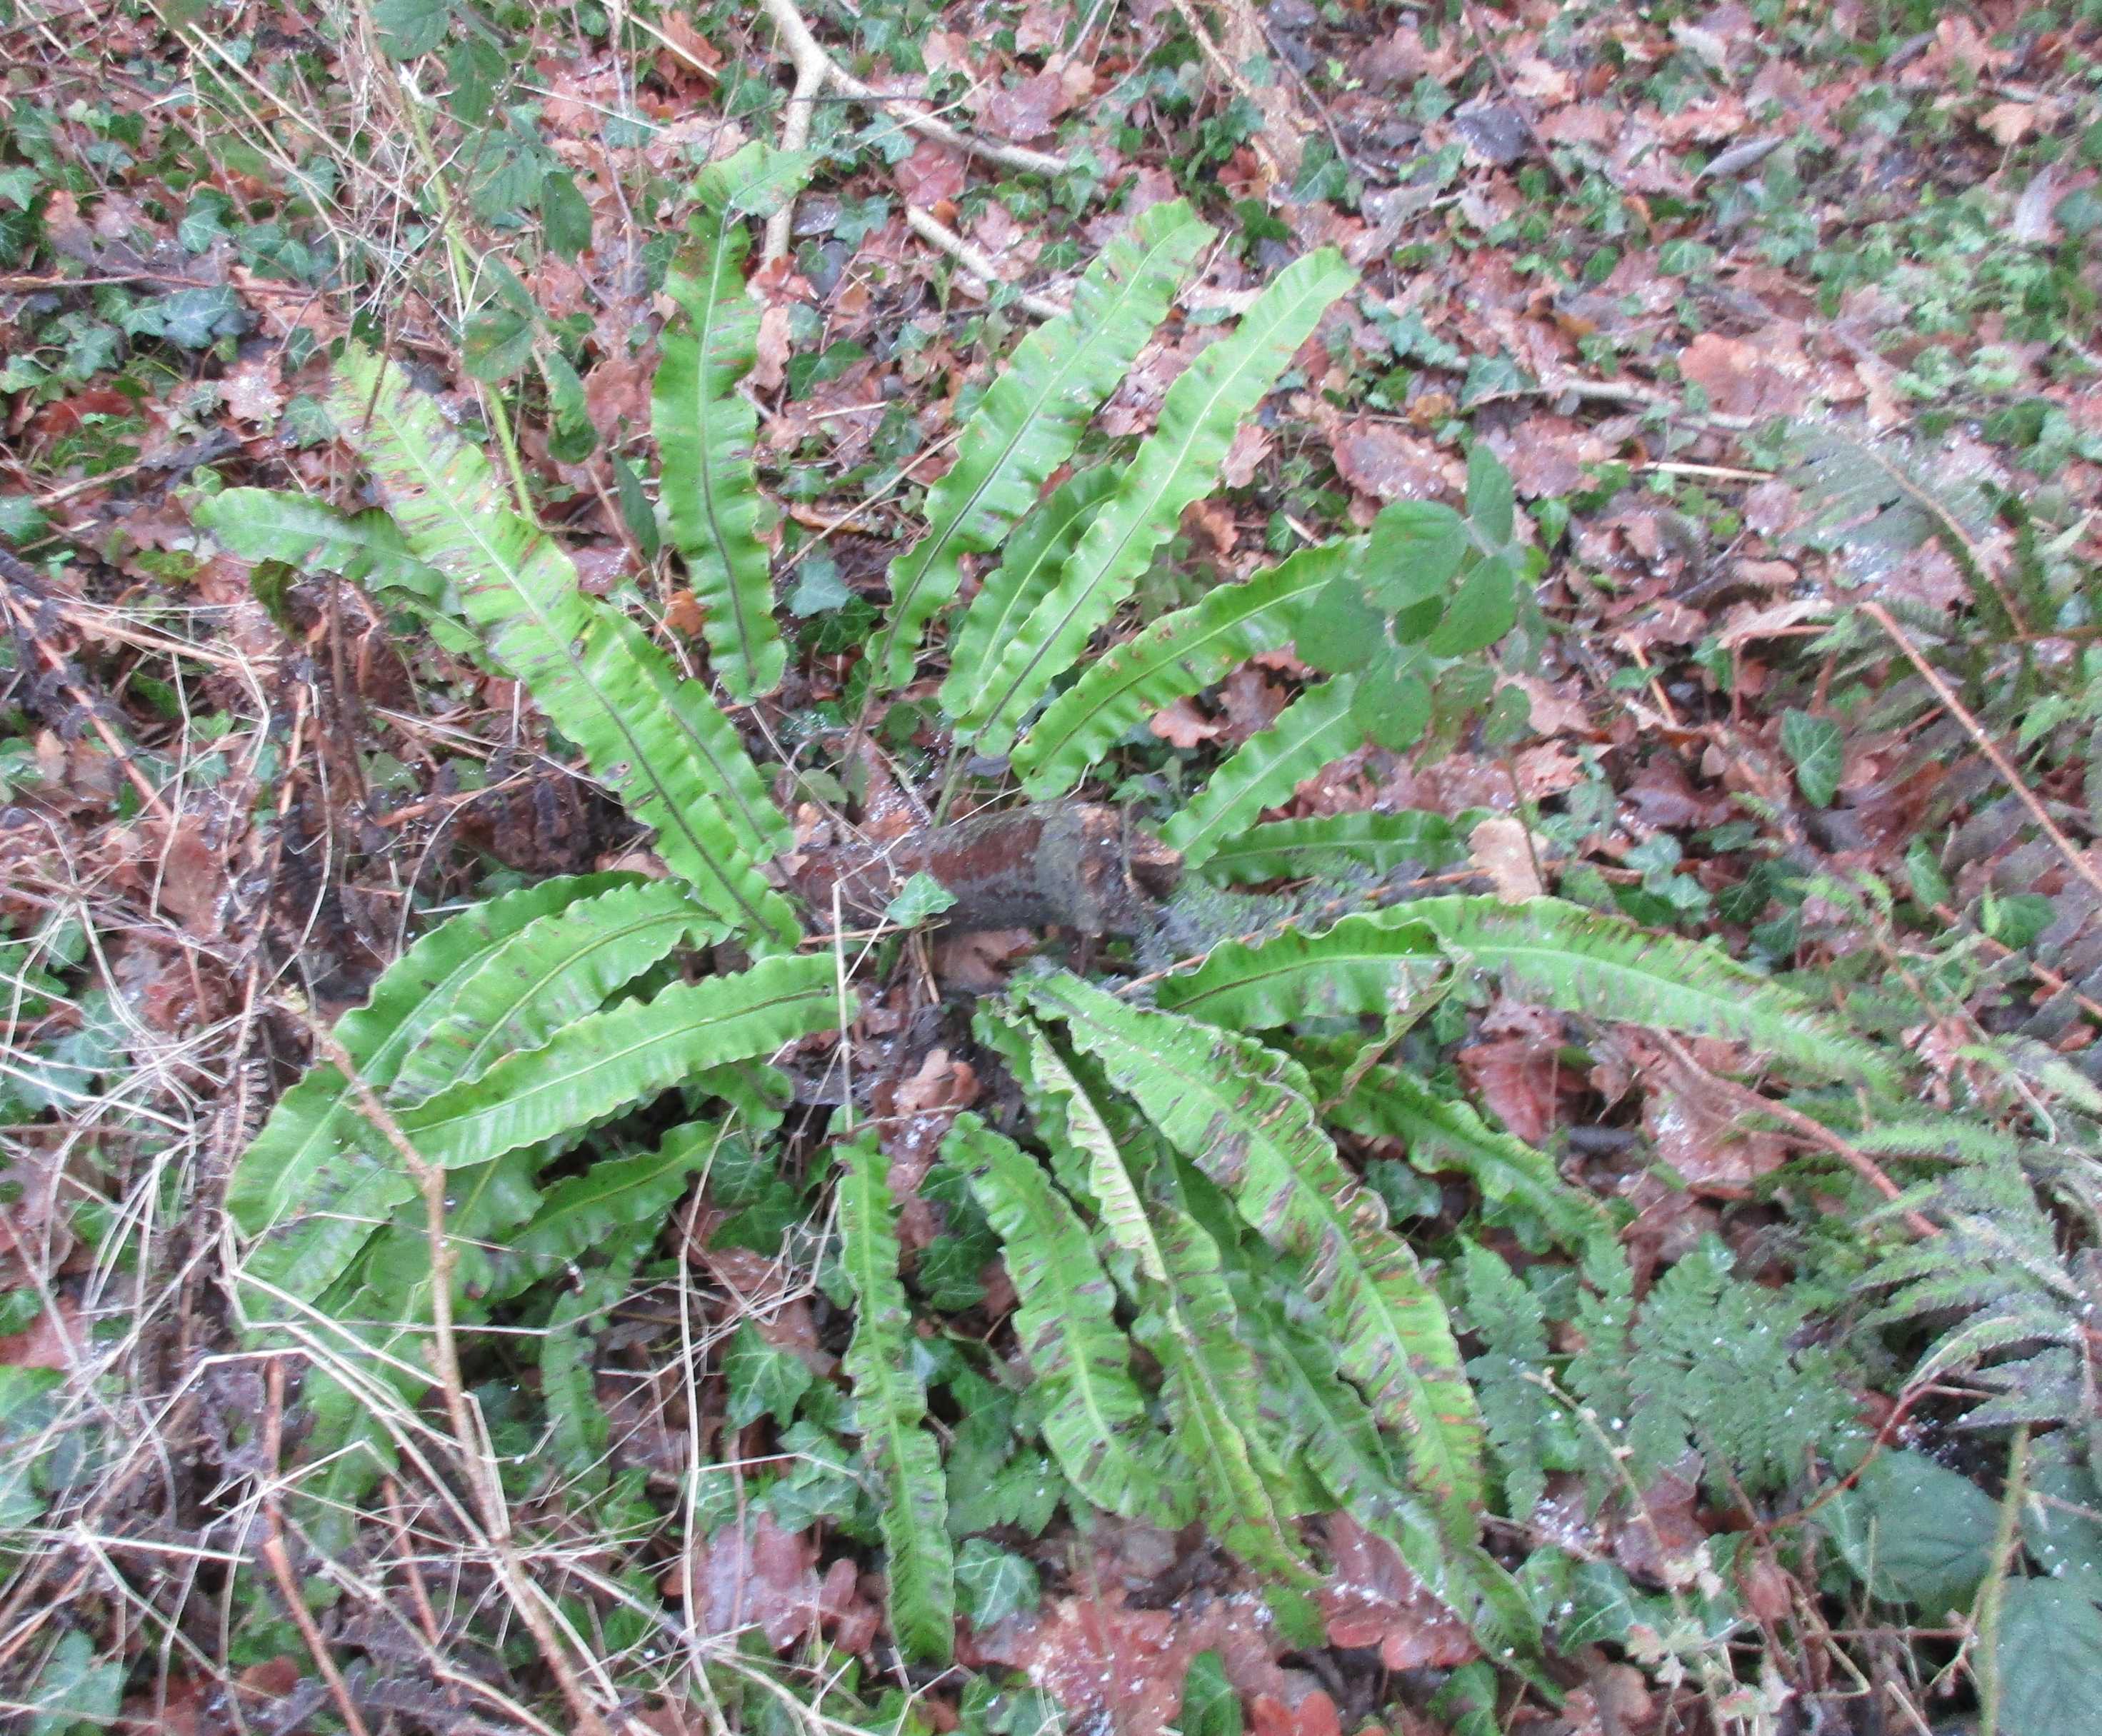 Harts Tongue fern in winter.